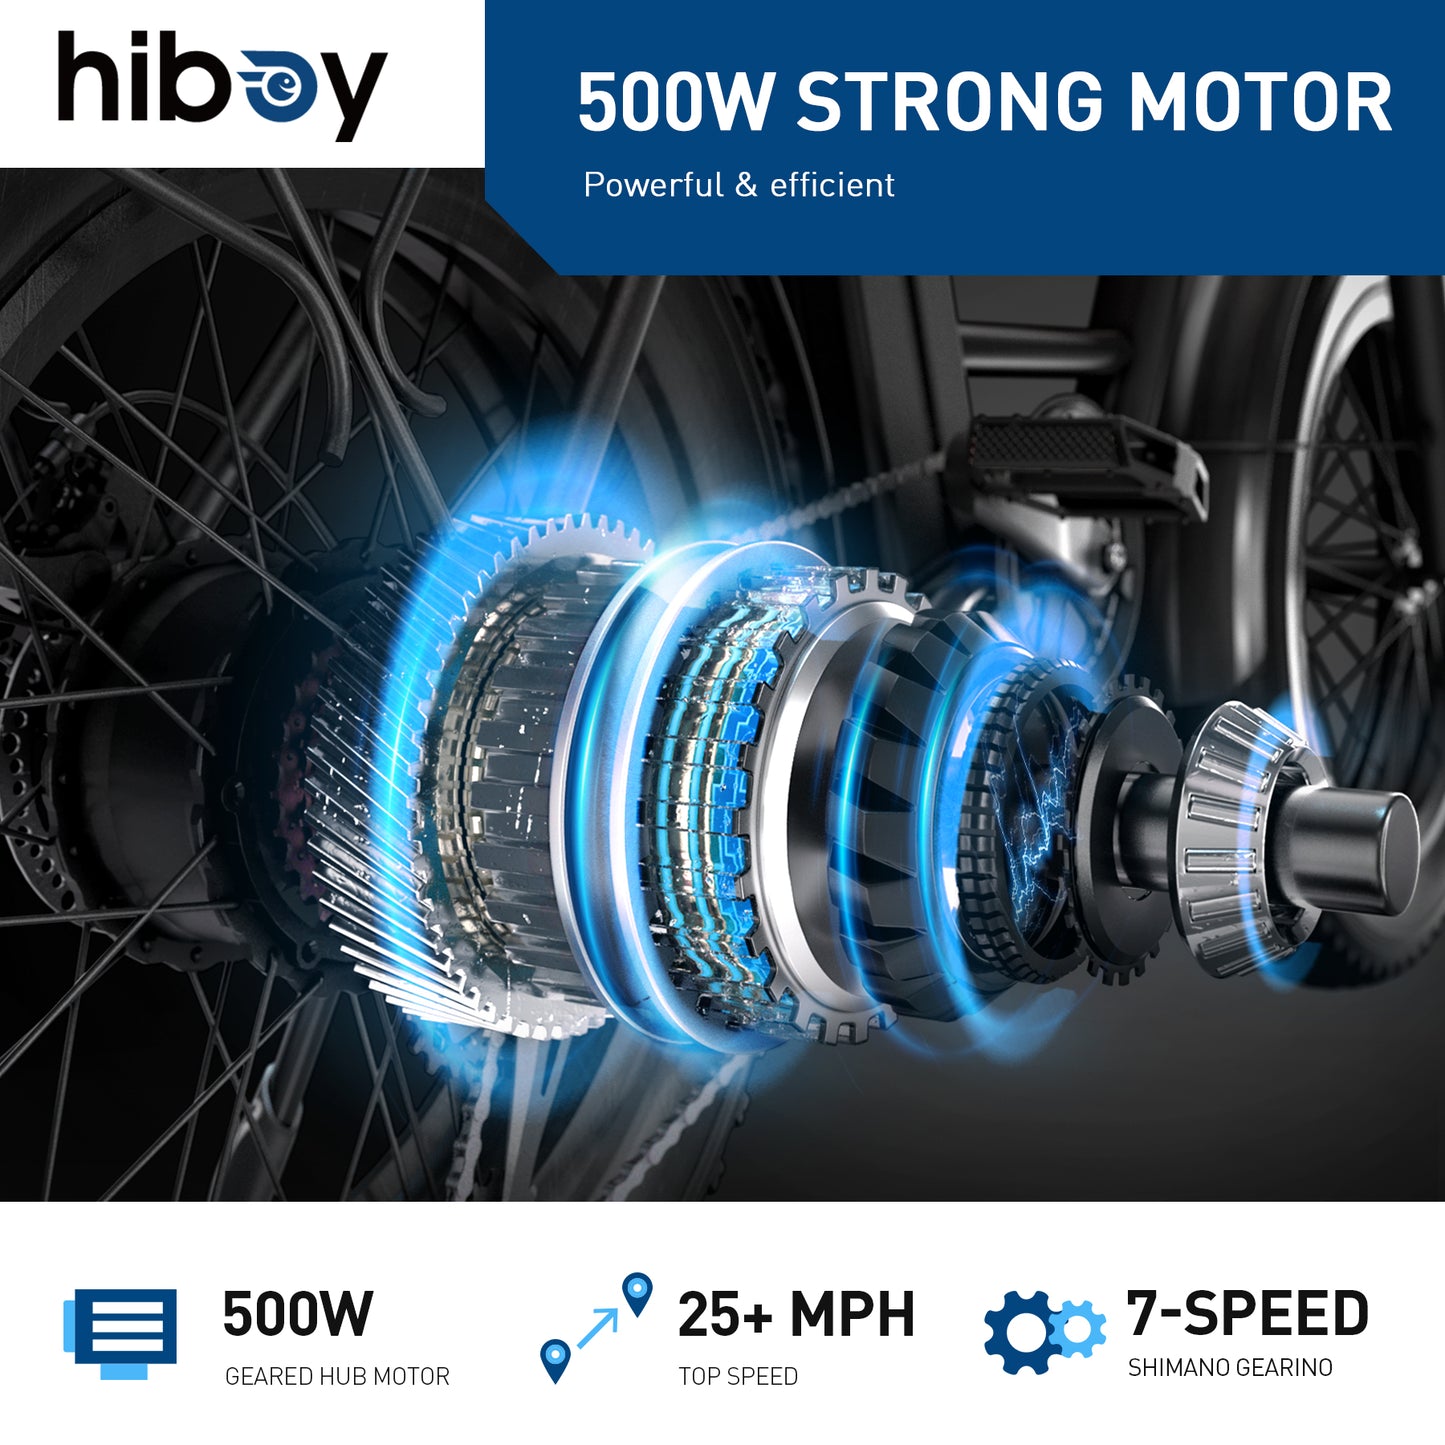 Hiboy EX6 Step-thru Fat Tire Electric Bike, Own